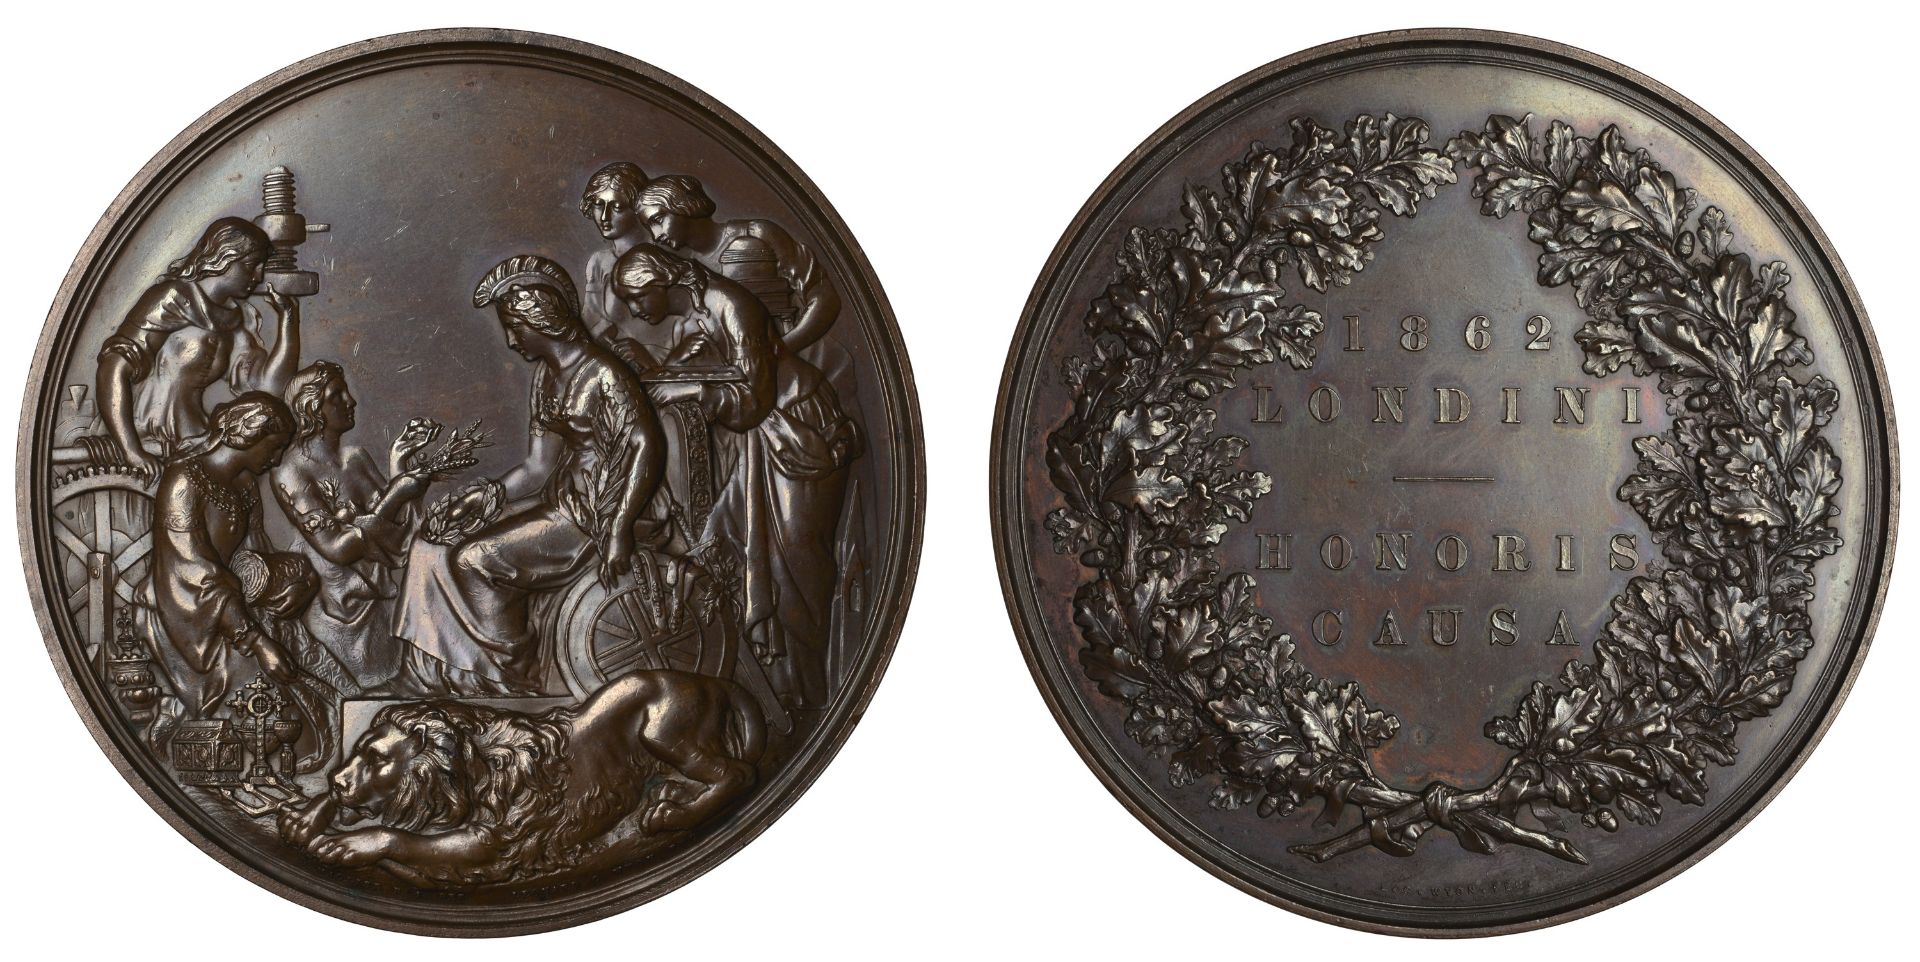 International Exhibition, South Kensington, 1862, Prize Medal, a copper award by L.C. Wyon [...